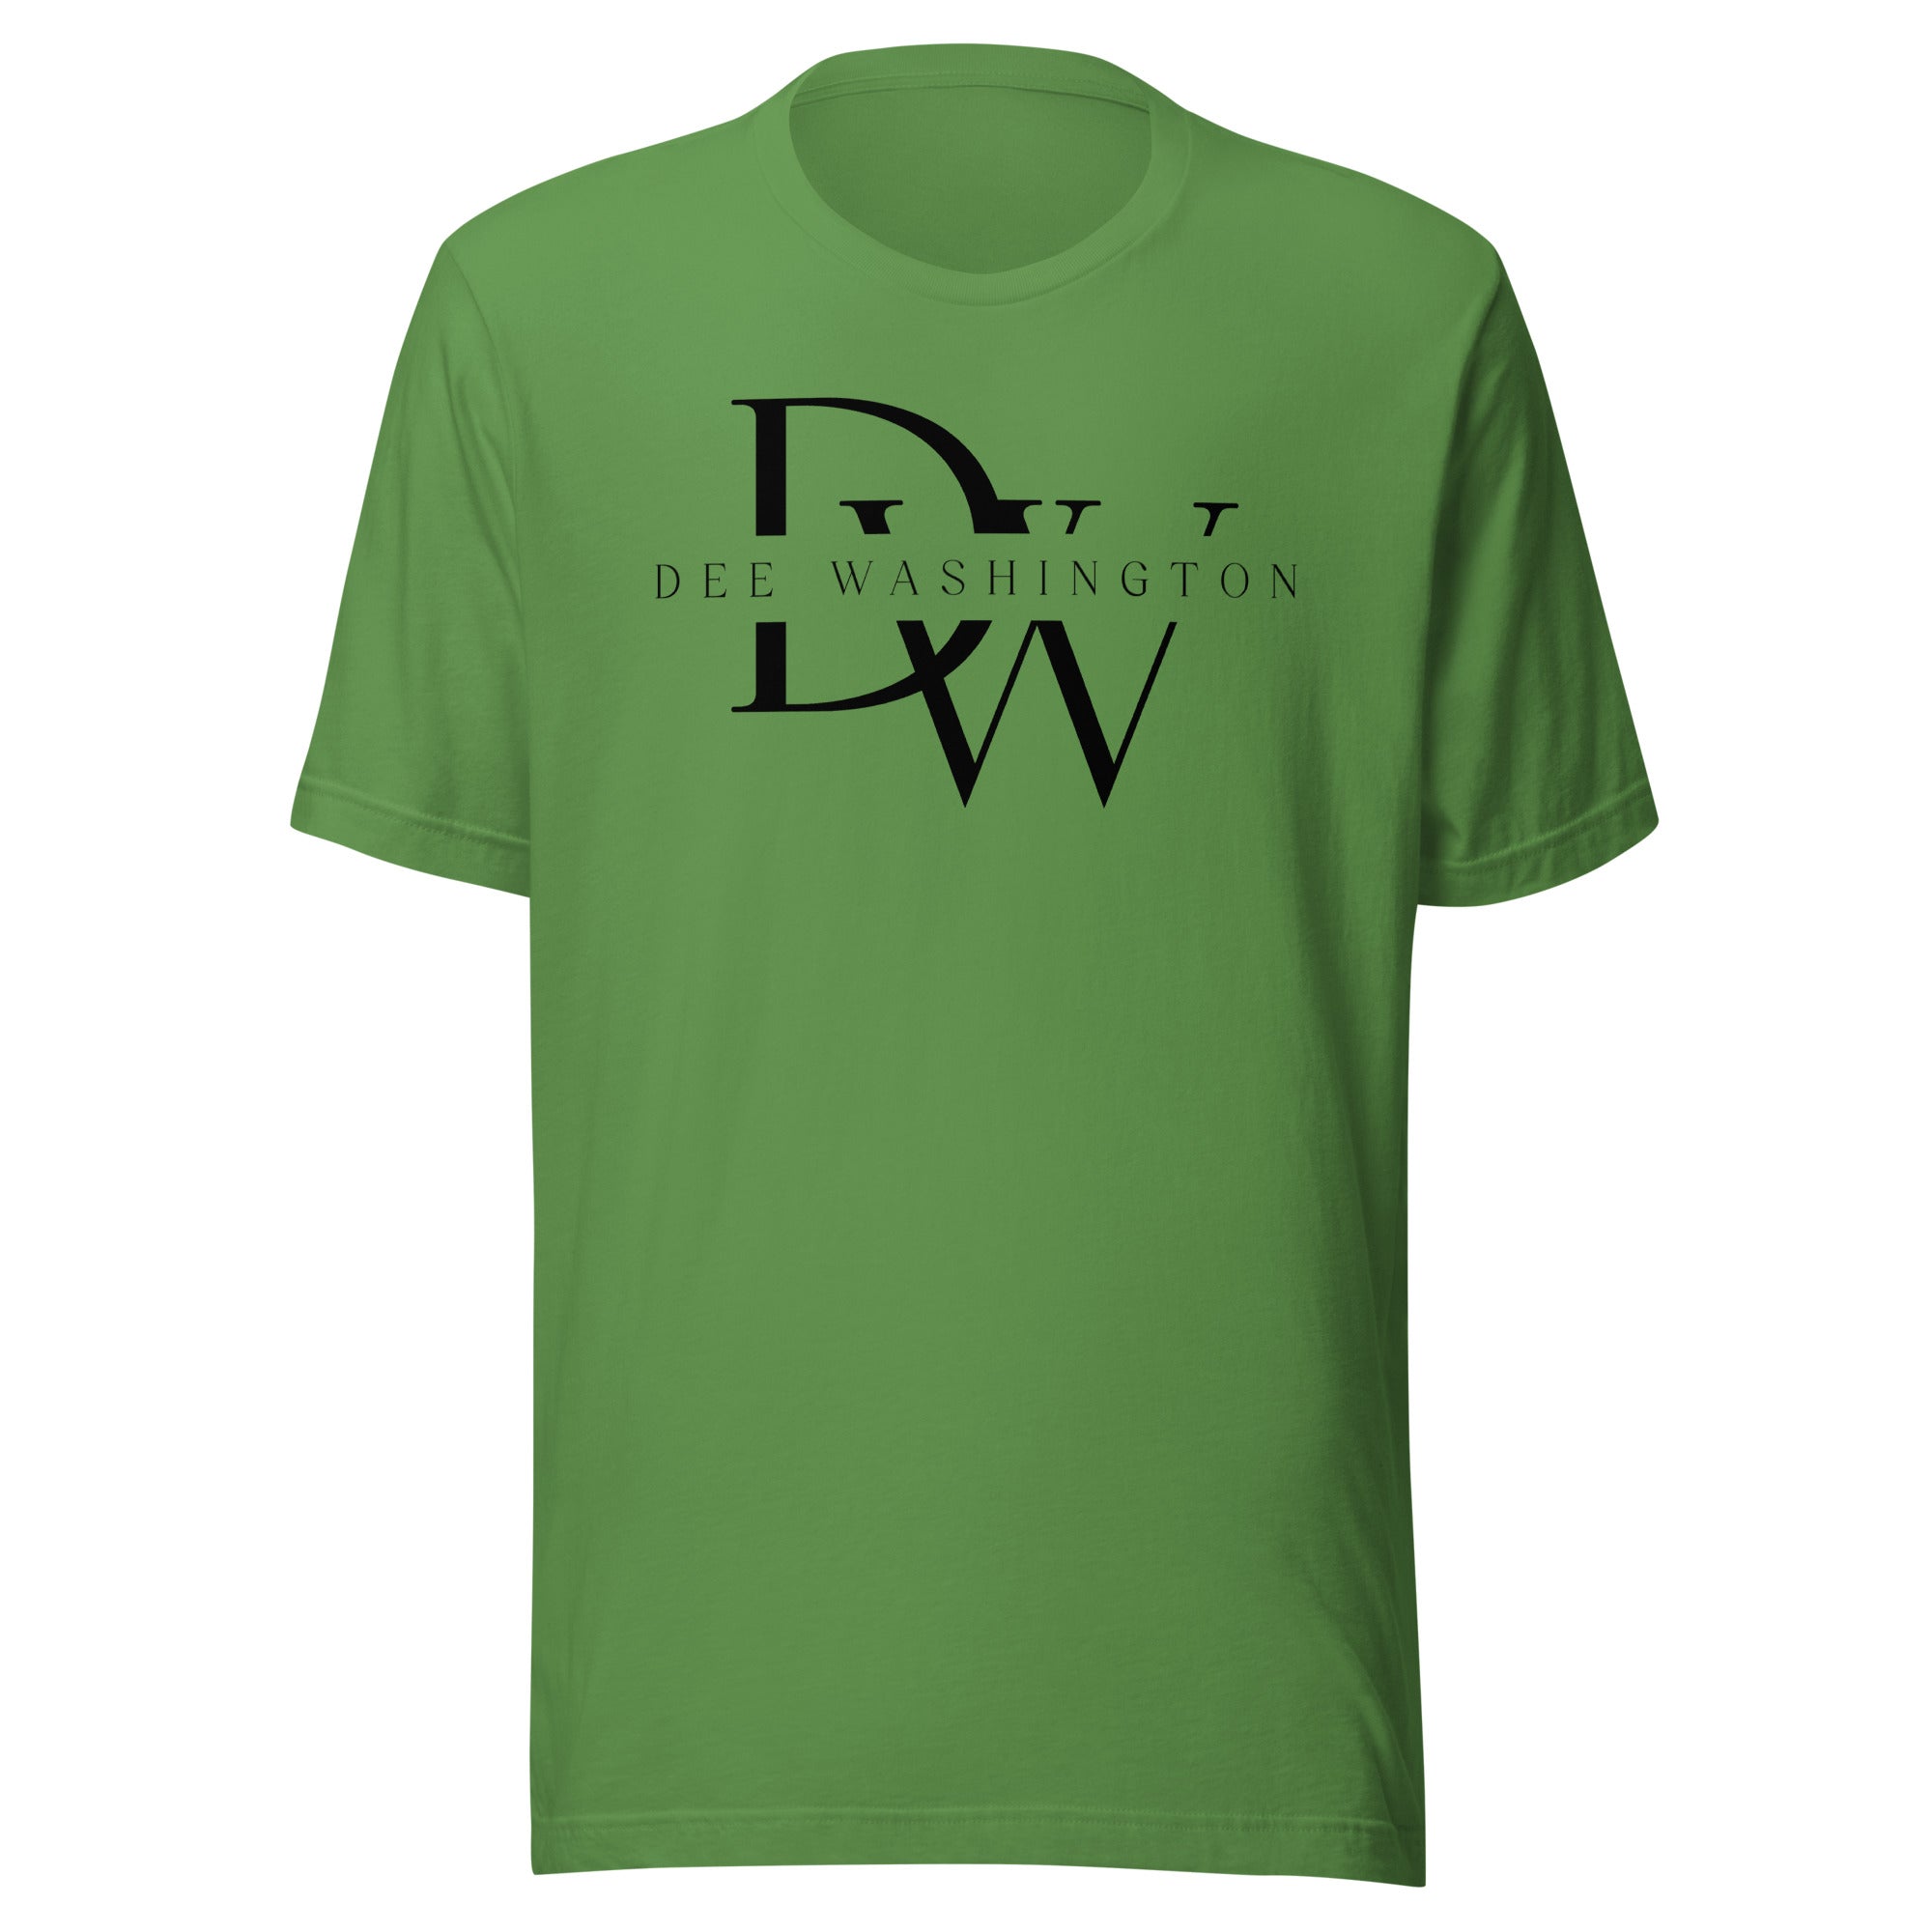 Dee Washington - Unisex t-shirt